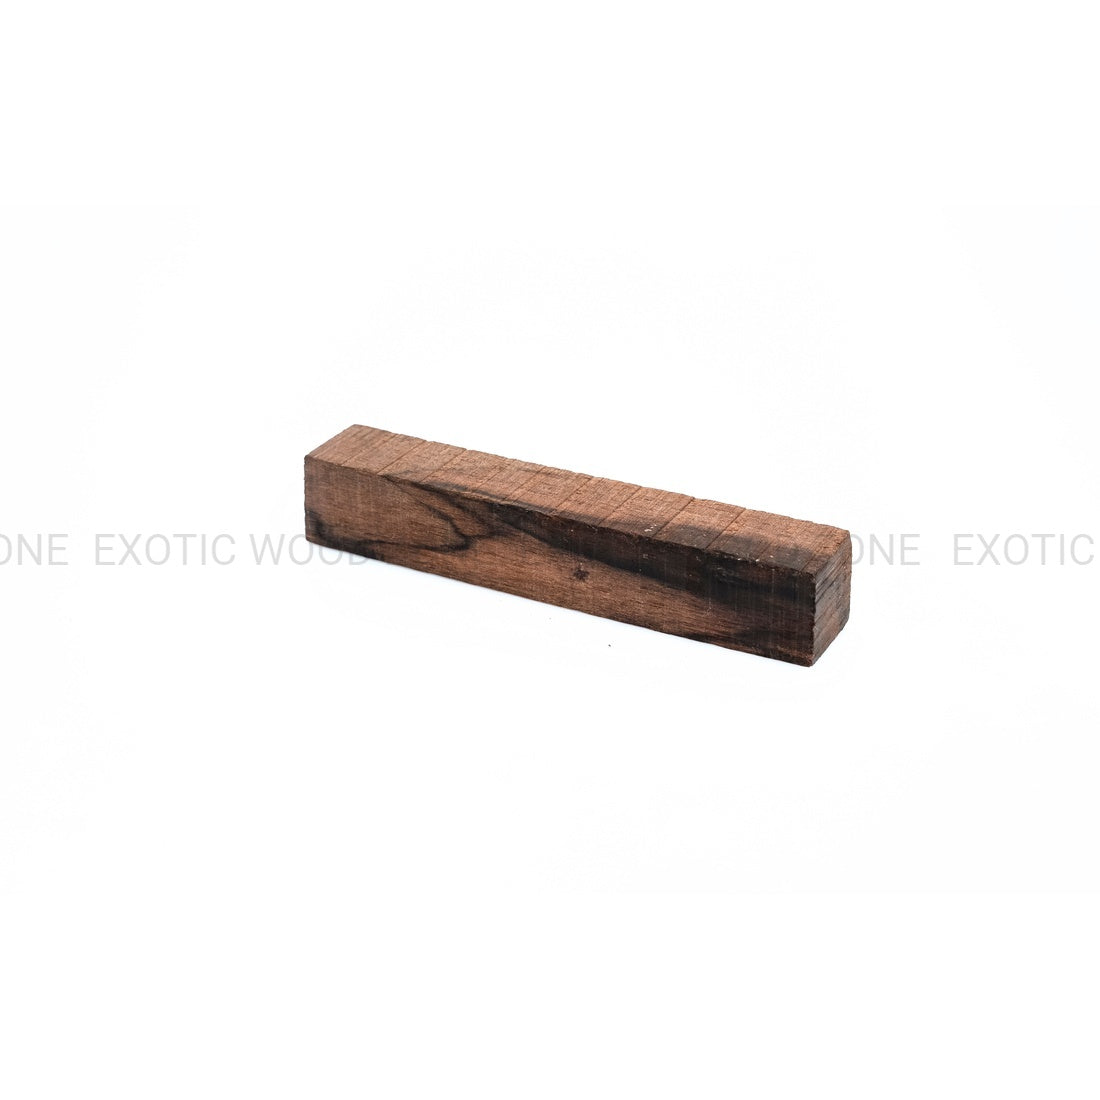 Exotic Ebony Wood Pen Blanks - Exotic Wood Zone - Buy online Across USA 